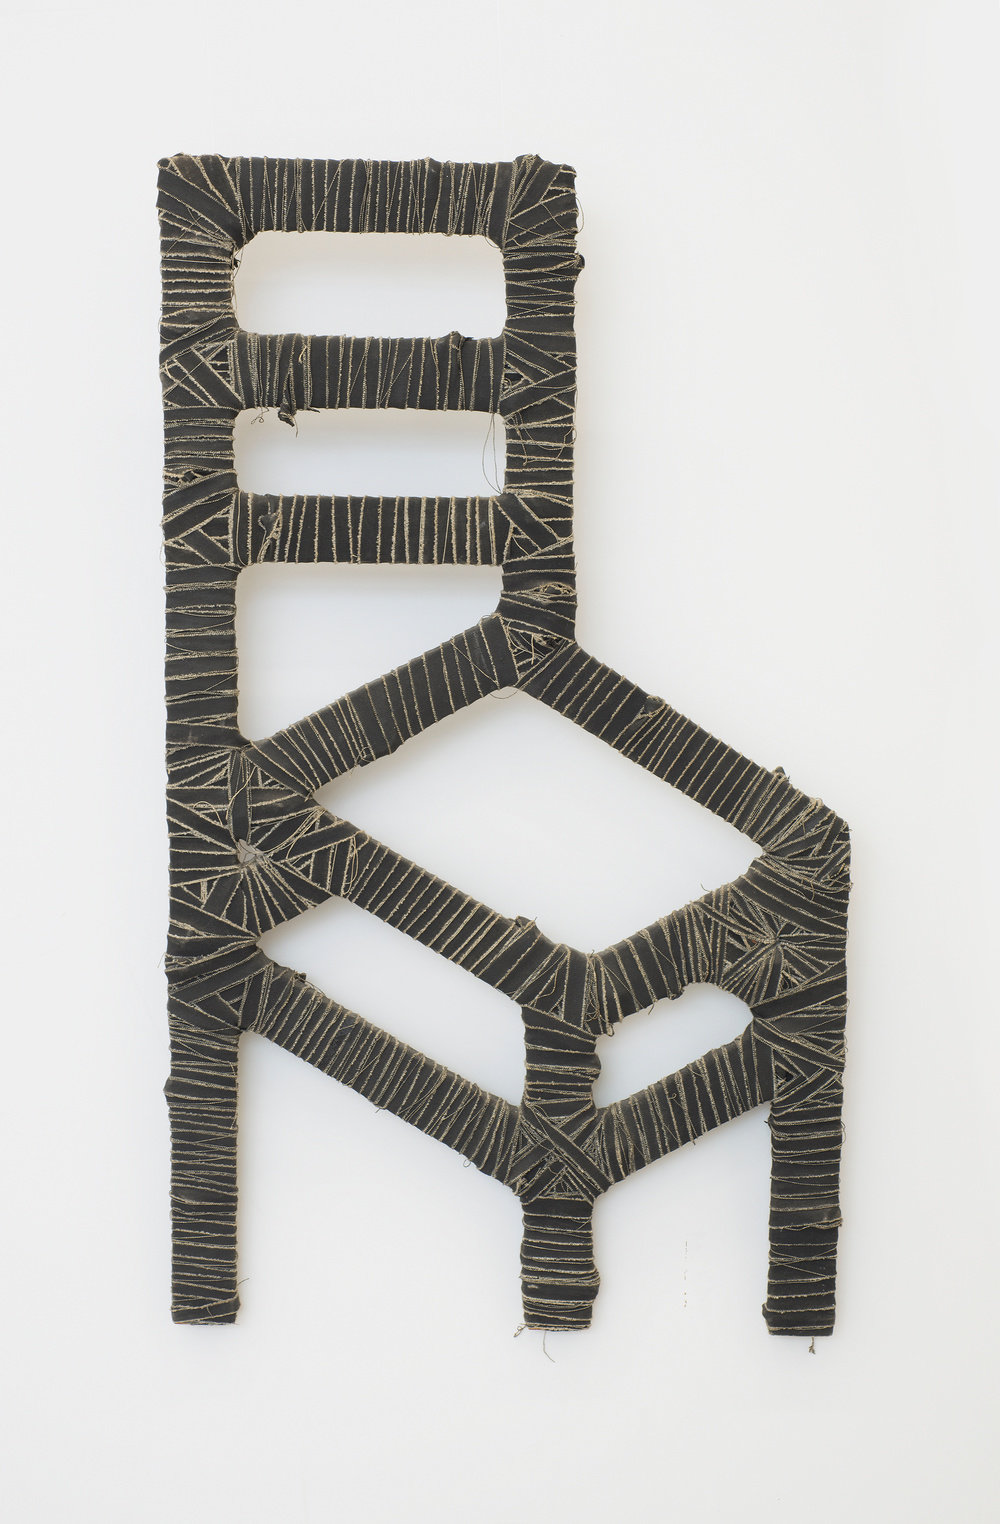 Phelan, ellen, untitled (chair), 1972, acrylic on canvas wrapped wood, 38.5 x 22.5 x .75 in. 97.8 x 57.2 x 1.9 cm cnx 6599 photo credit bill orcutt